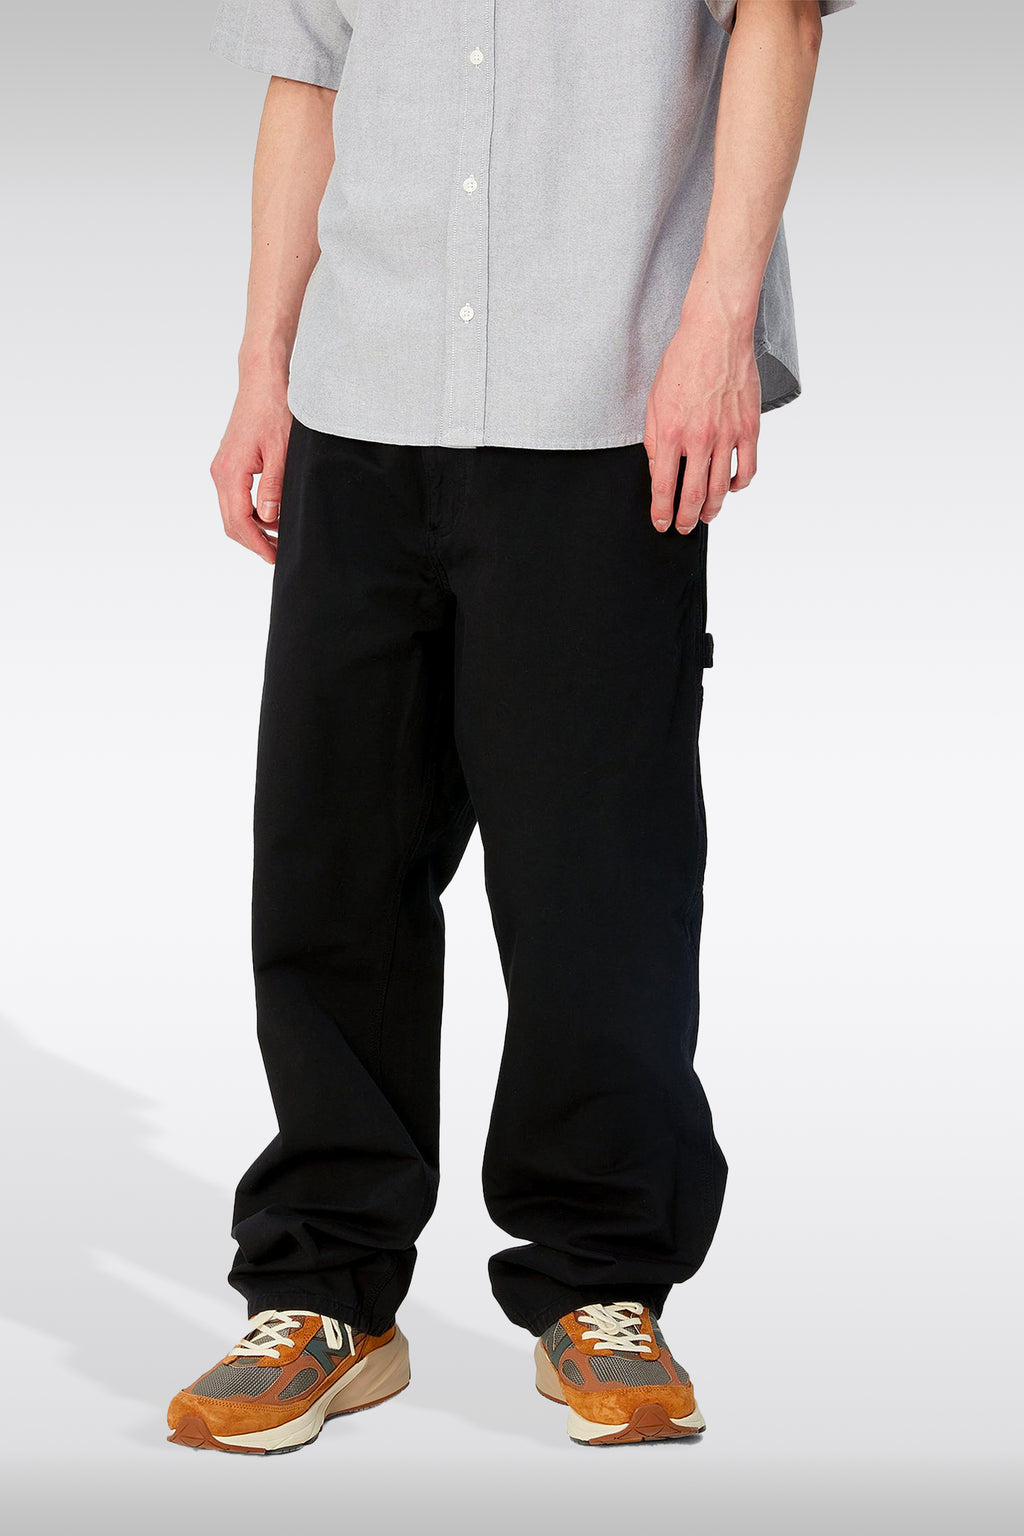 alt-image__Pantalone-workwear-in-drill-di-cotone-nero---Single-Knee-Pant